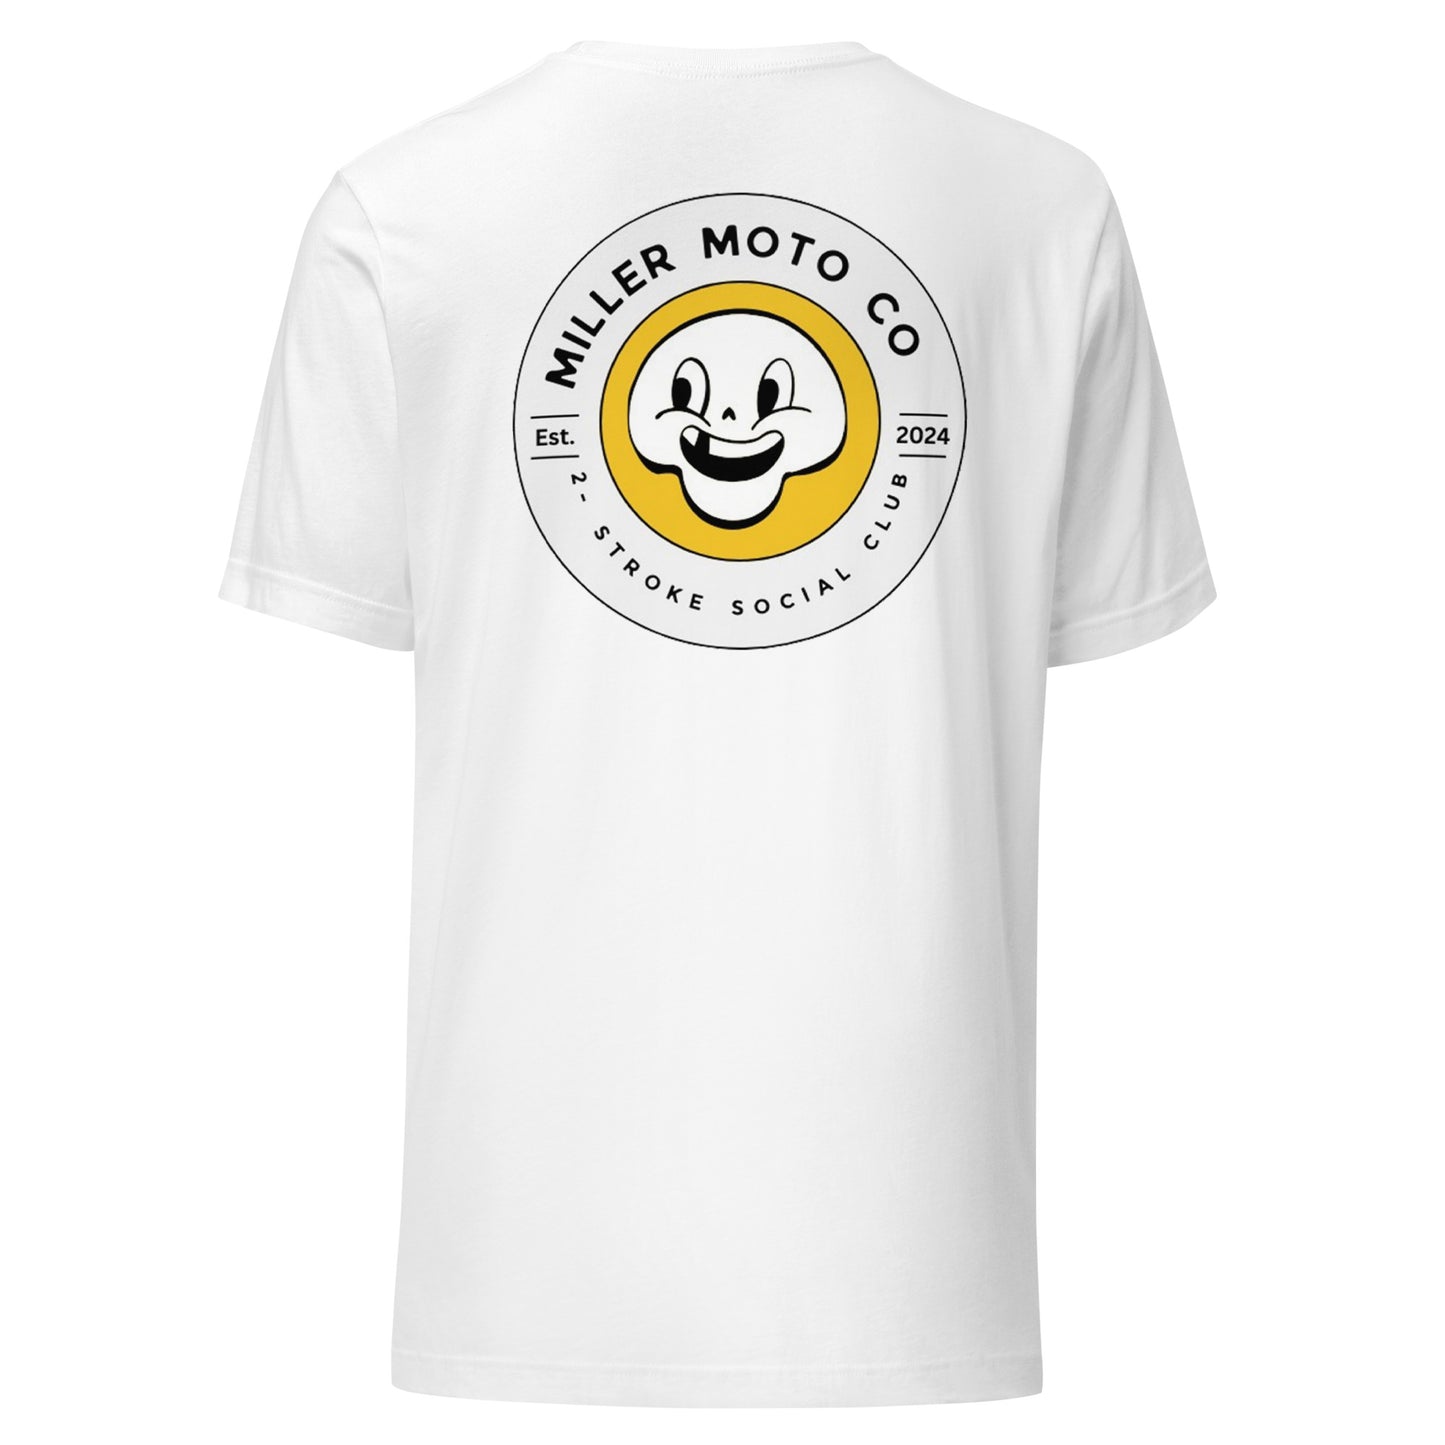 Miller Moto Co. 2-Stroke Social Club T-Shirt